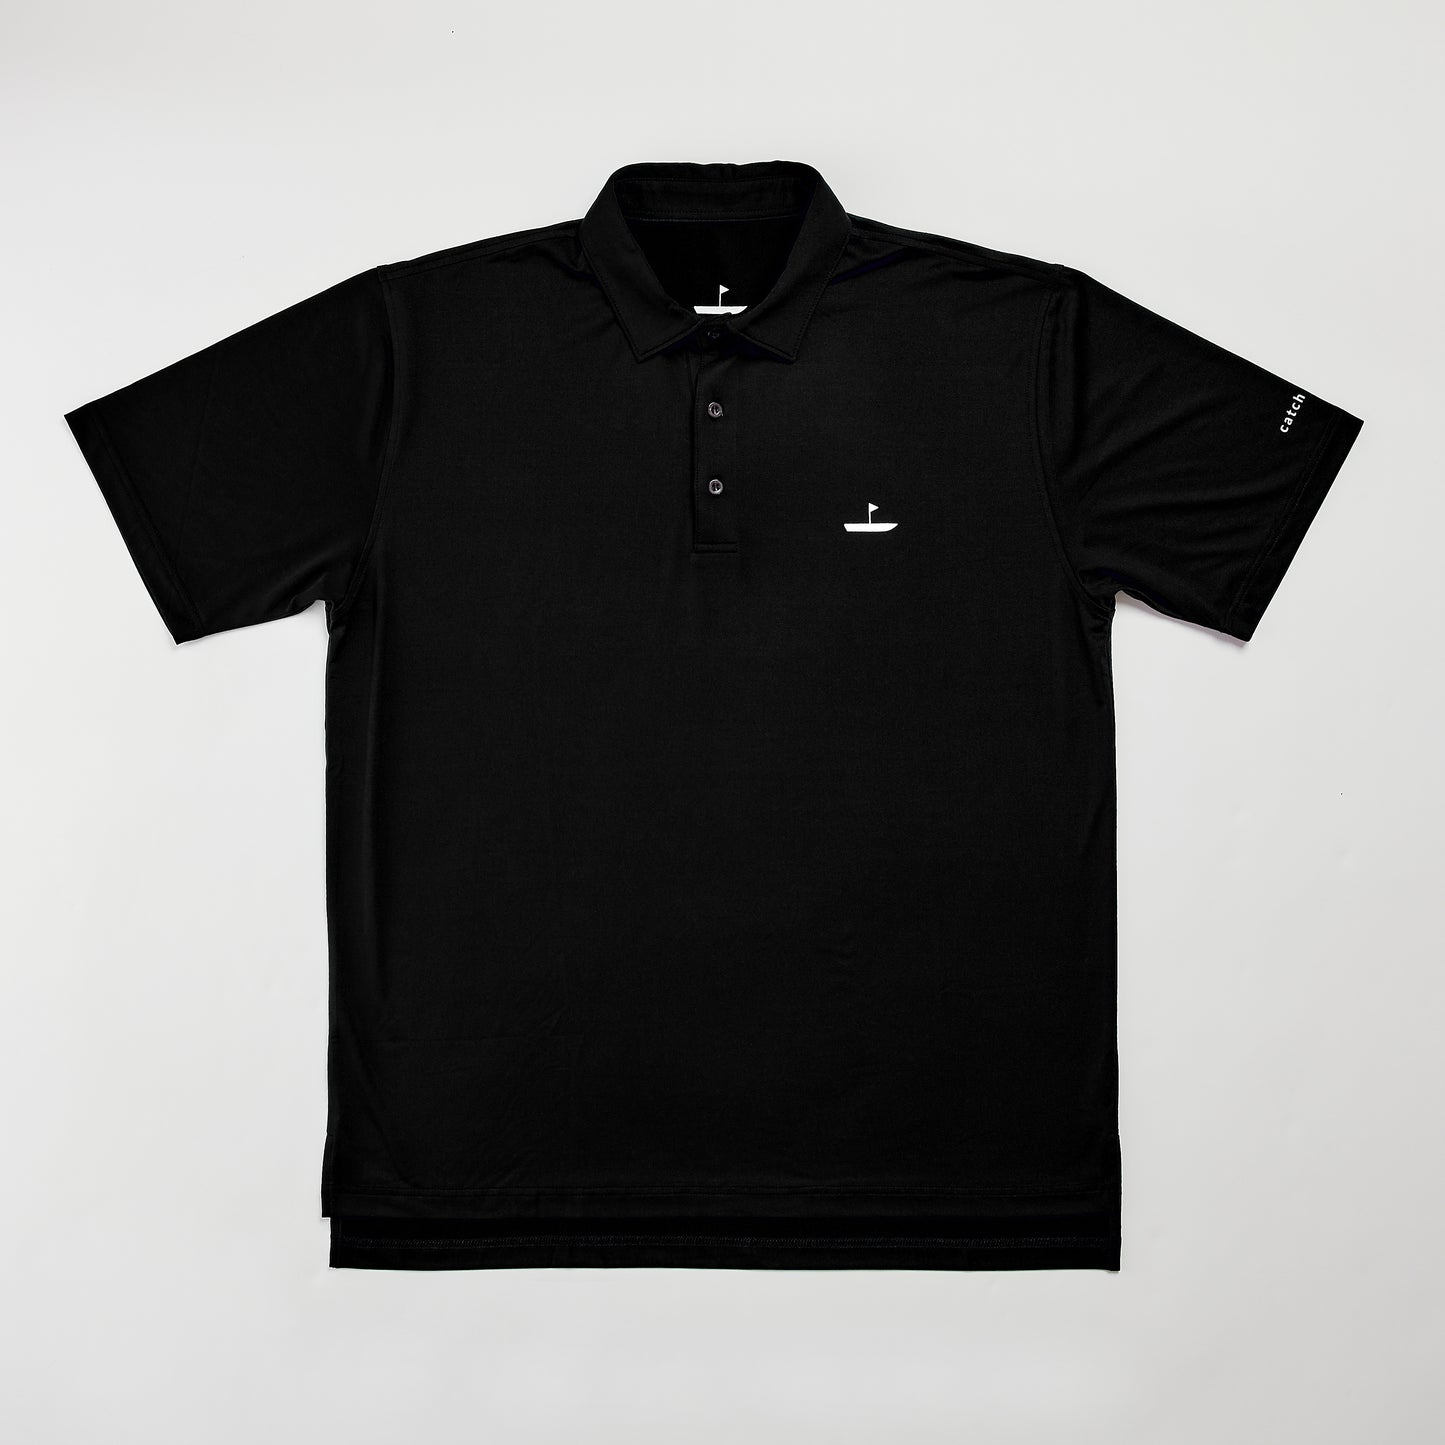 Performance Golf Shirt - Black